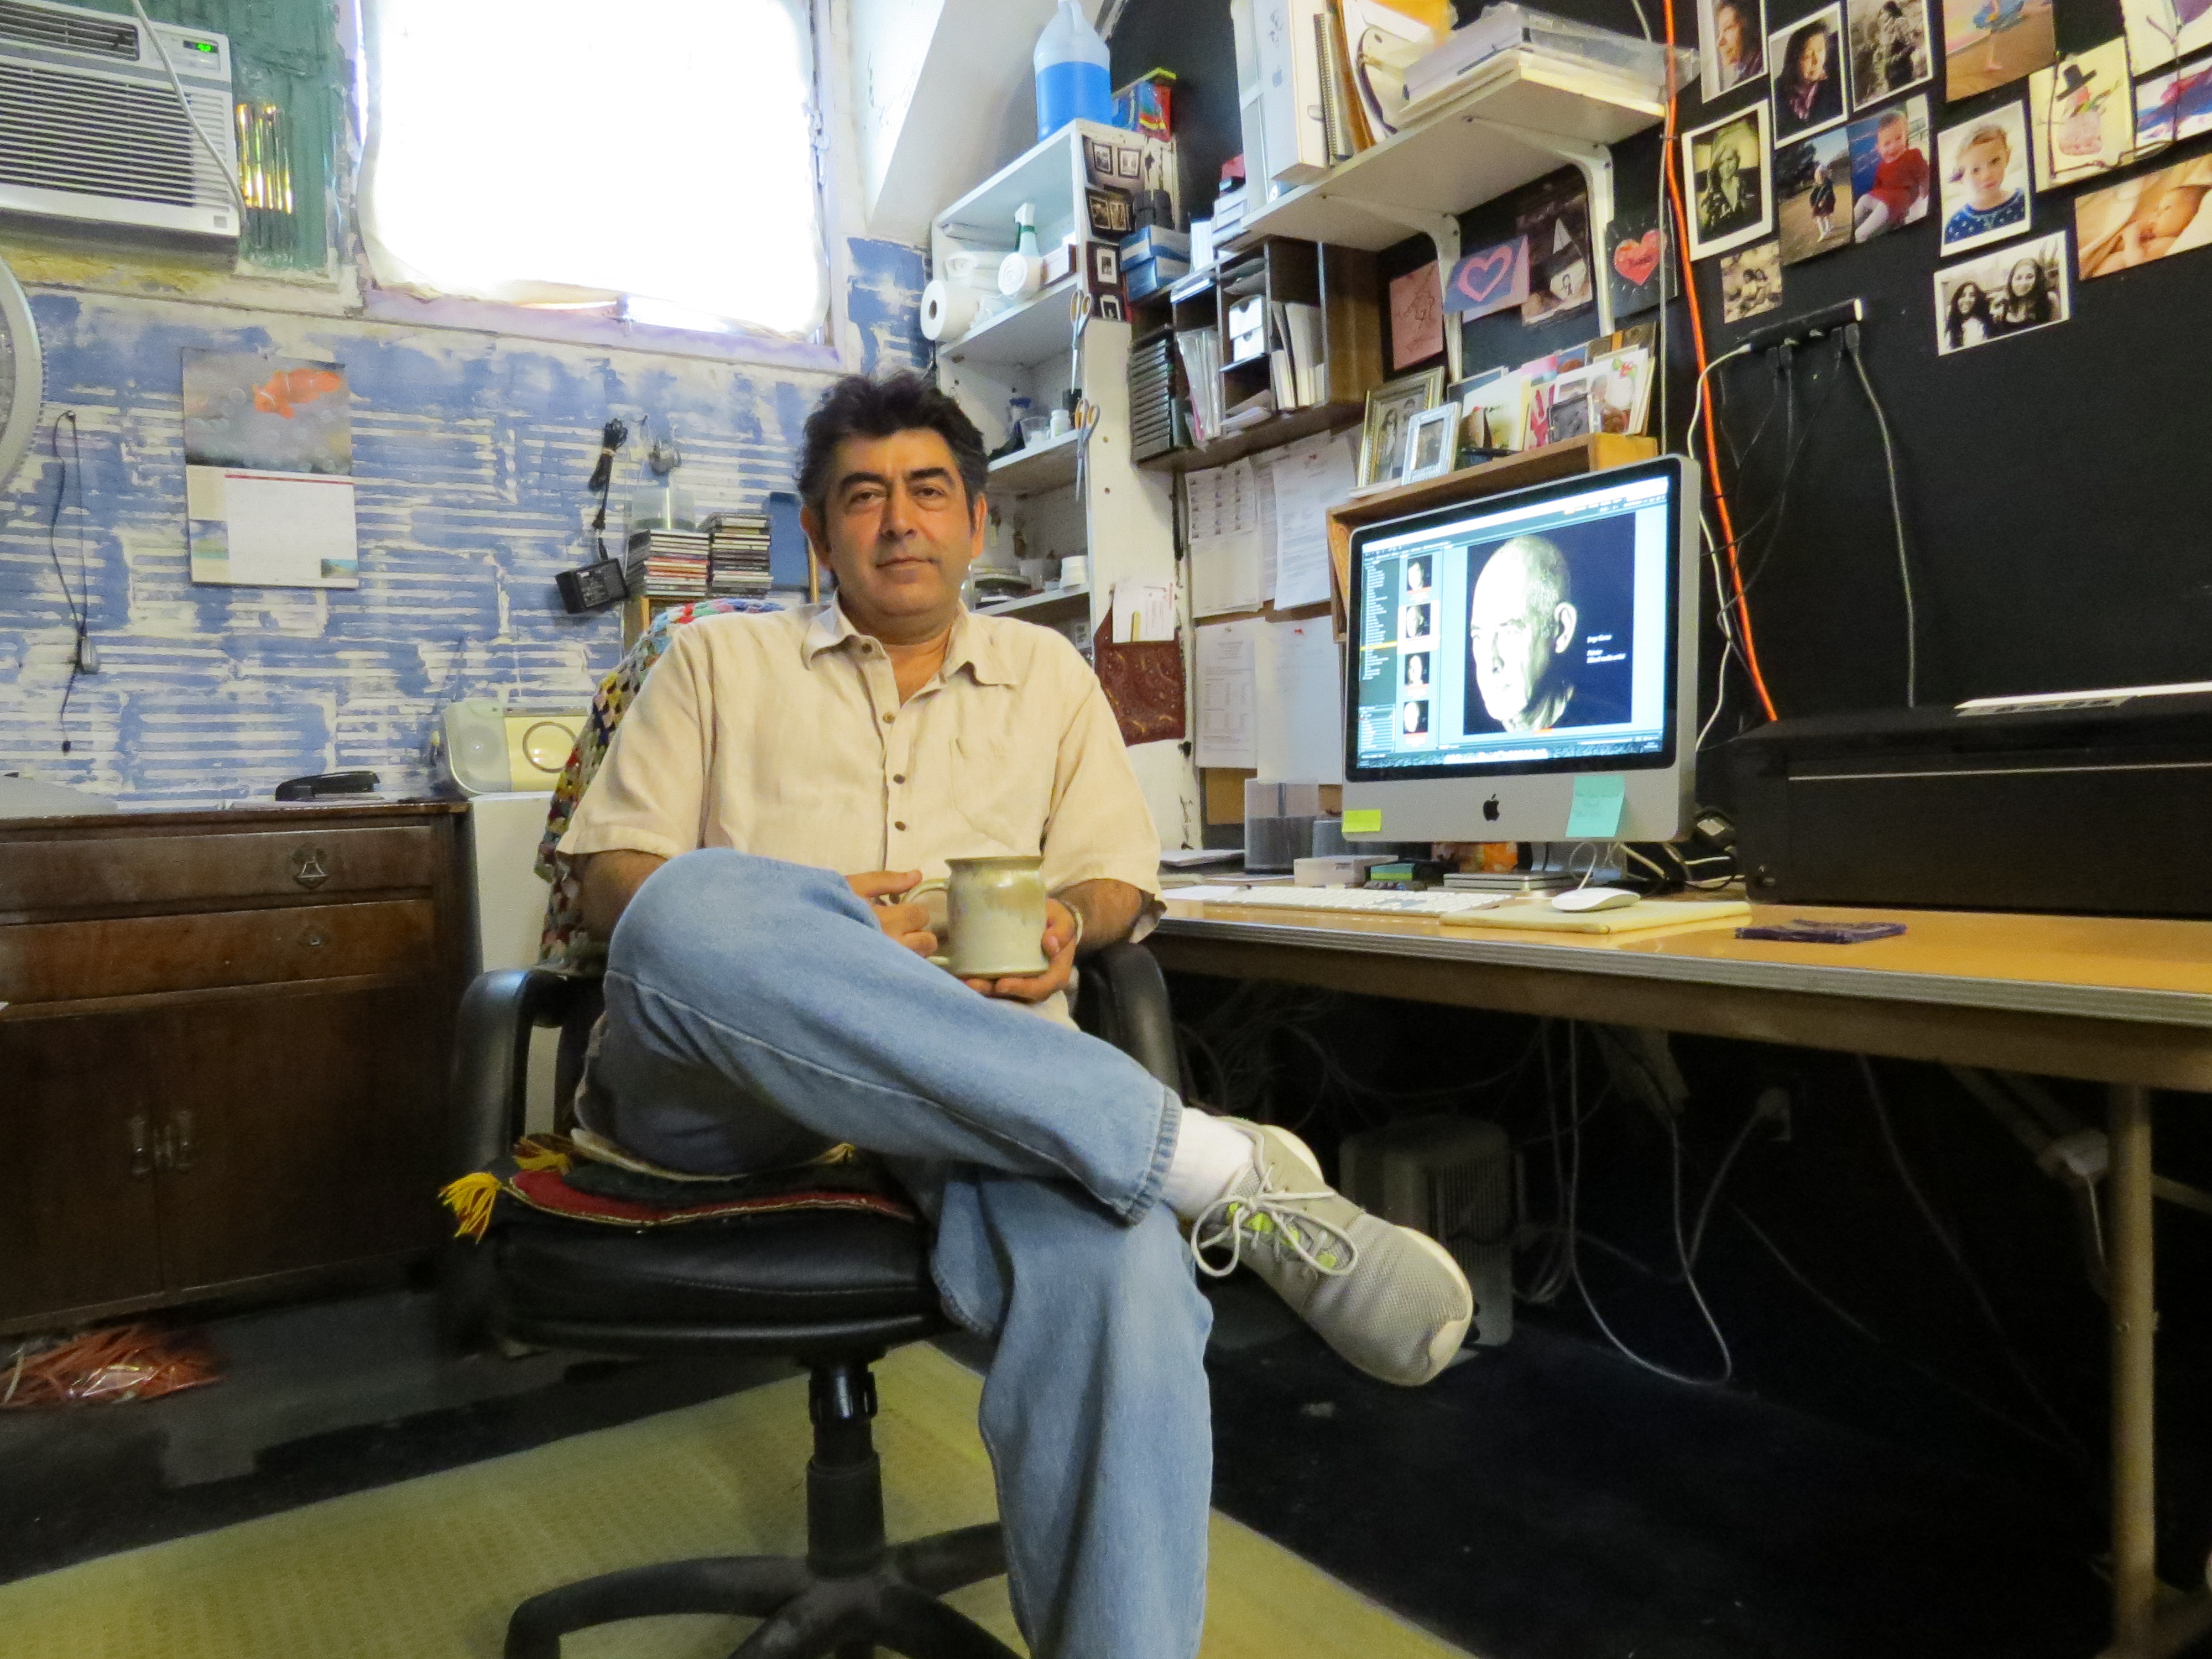  Ramin Samandari in his studio. Photo: David S. Rubin